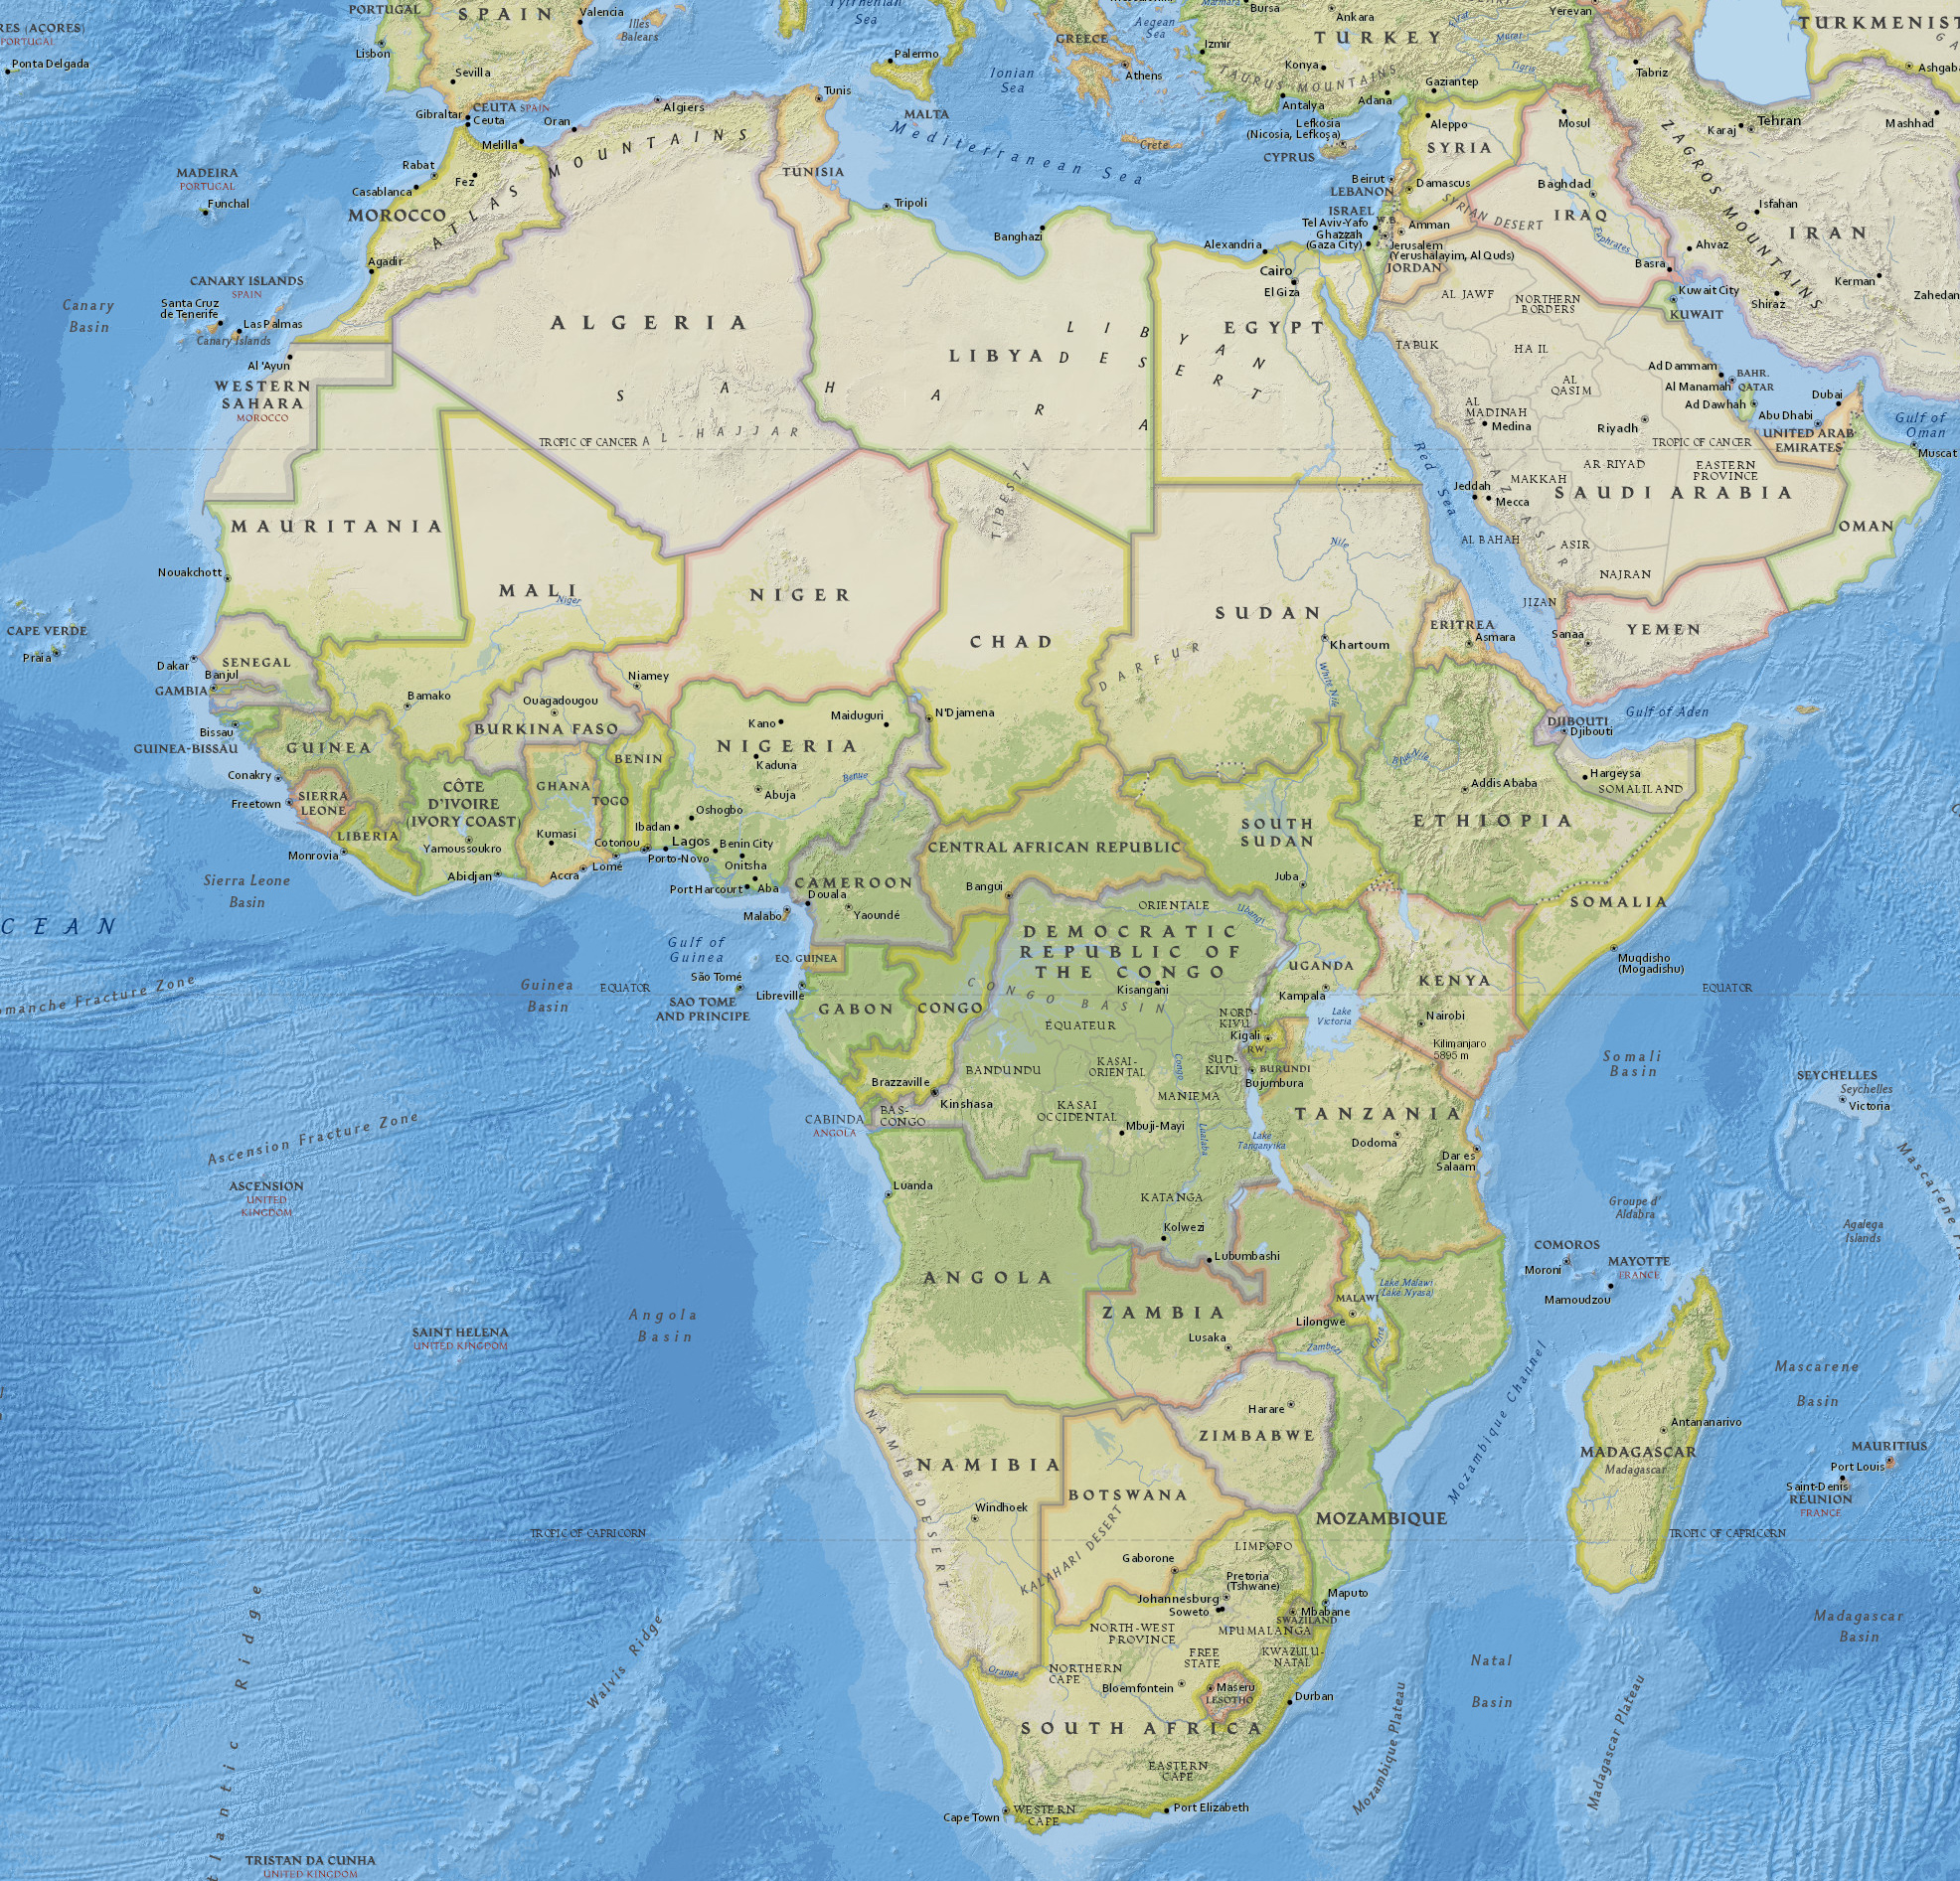 Mapa Africa